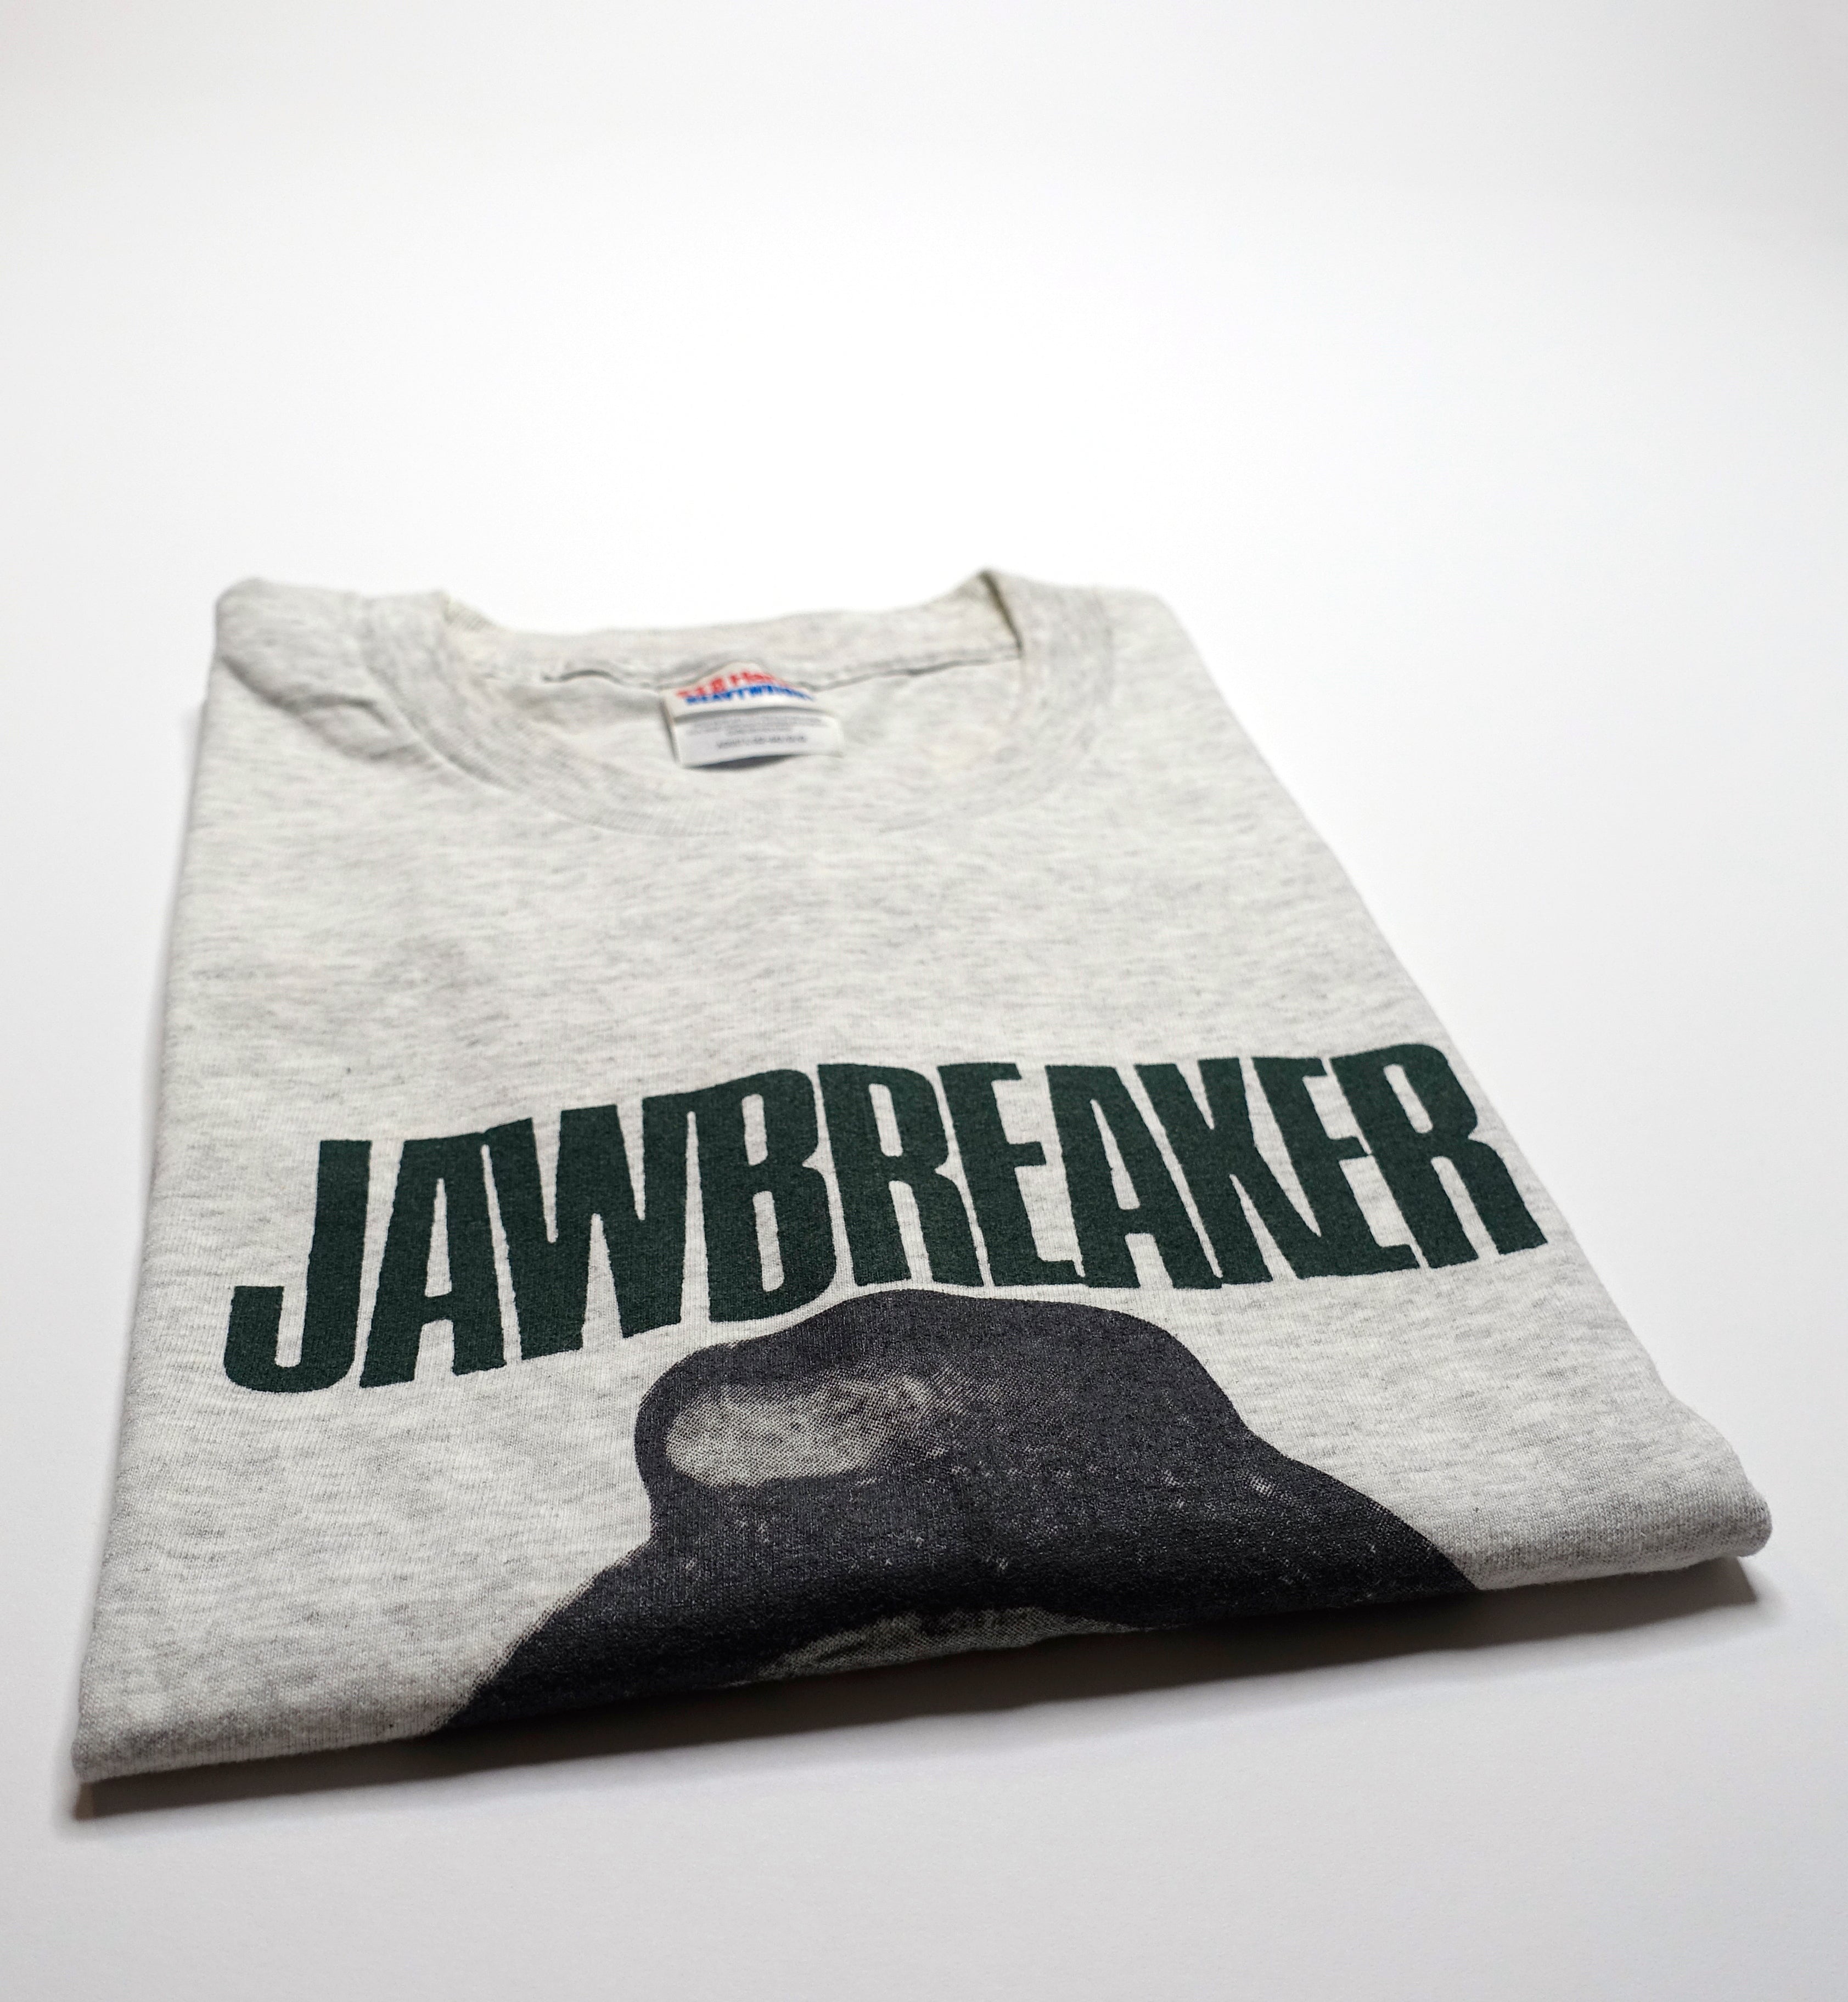 Jawbreaker - 24Hr Revenge Therapy 1994 Tour Shirt Size Large (Grey)